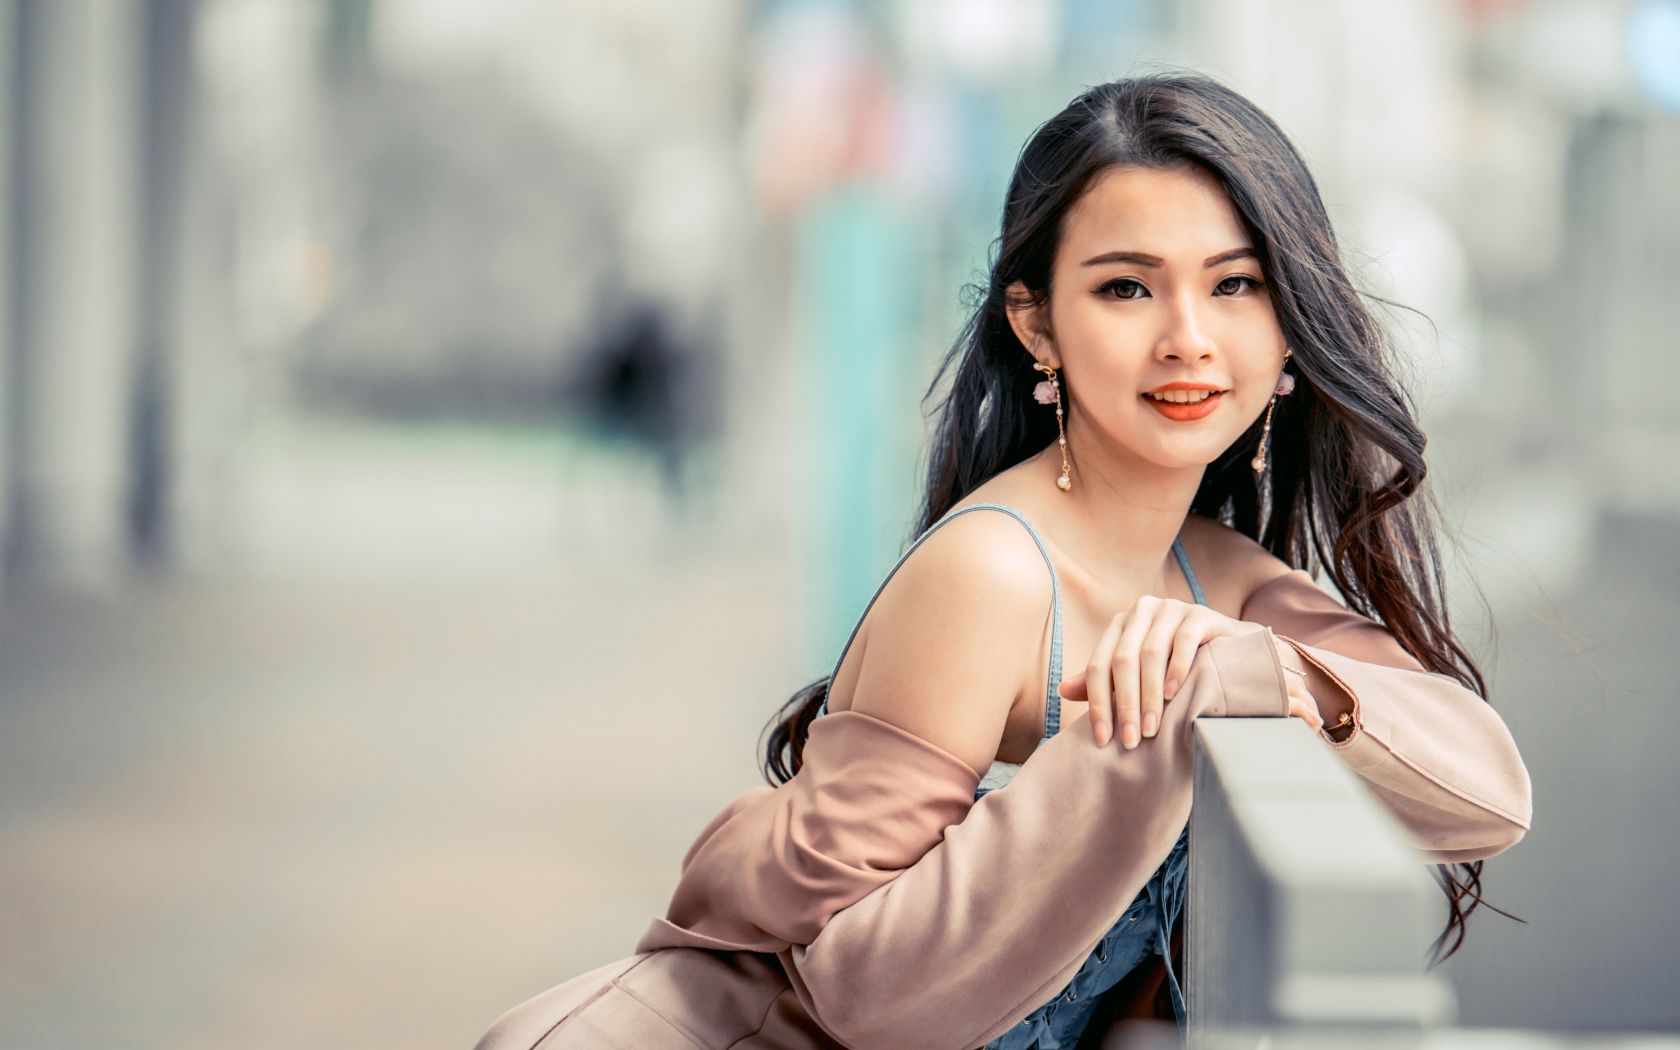 Charming Asian girl sitting on a bench Desktop wallpaper 1680x1050